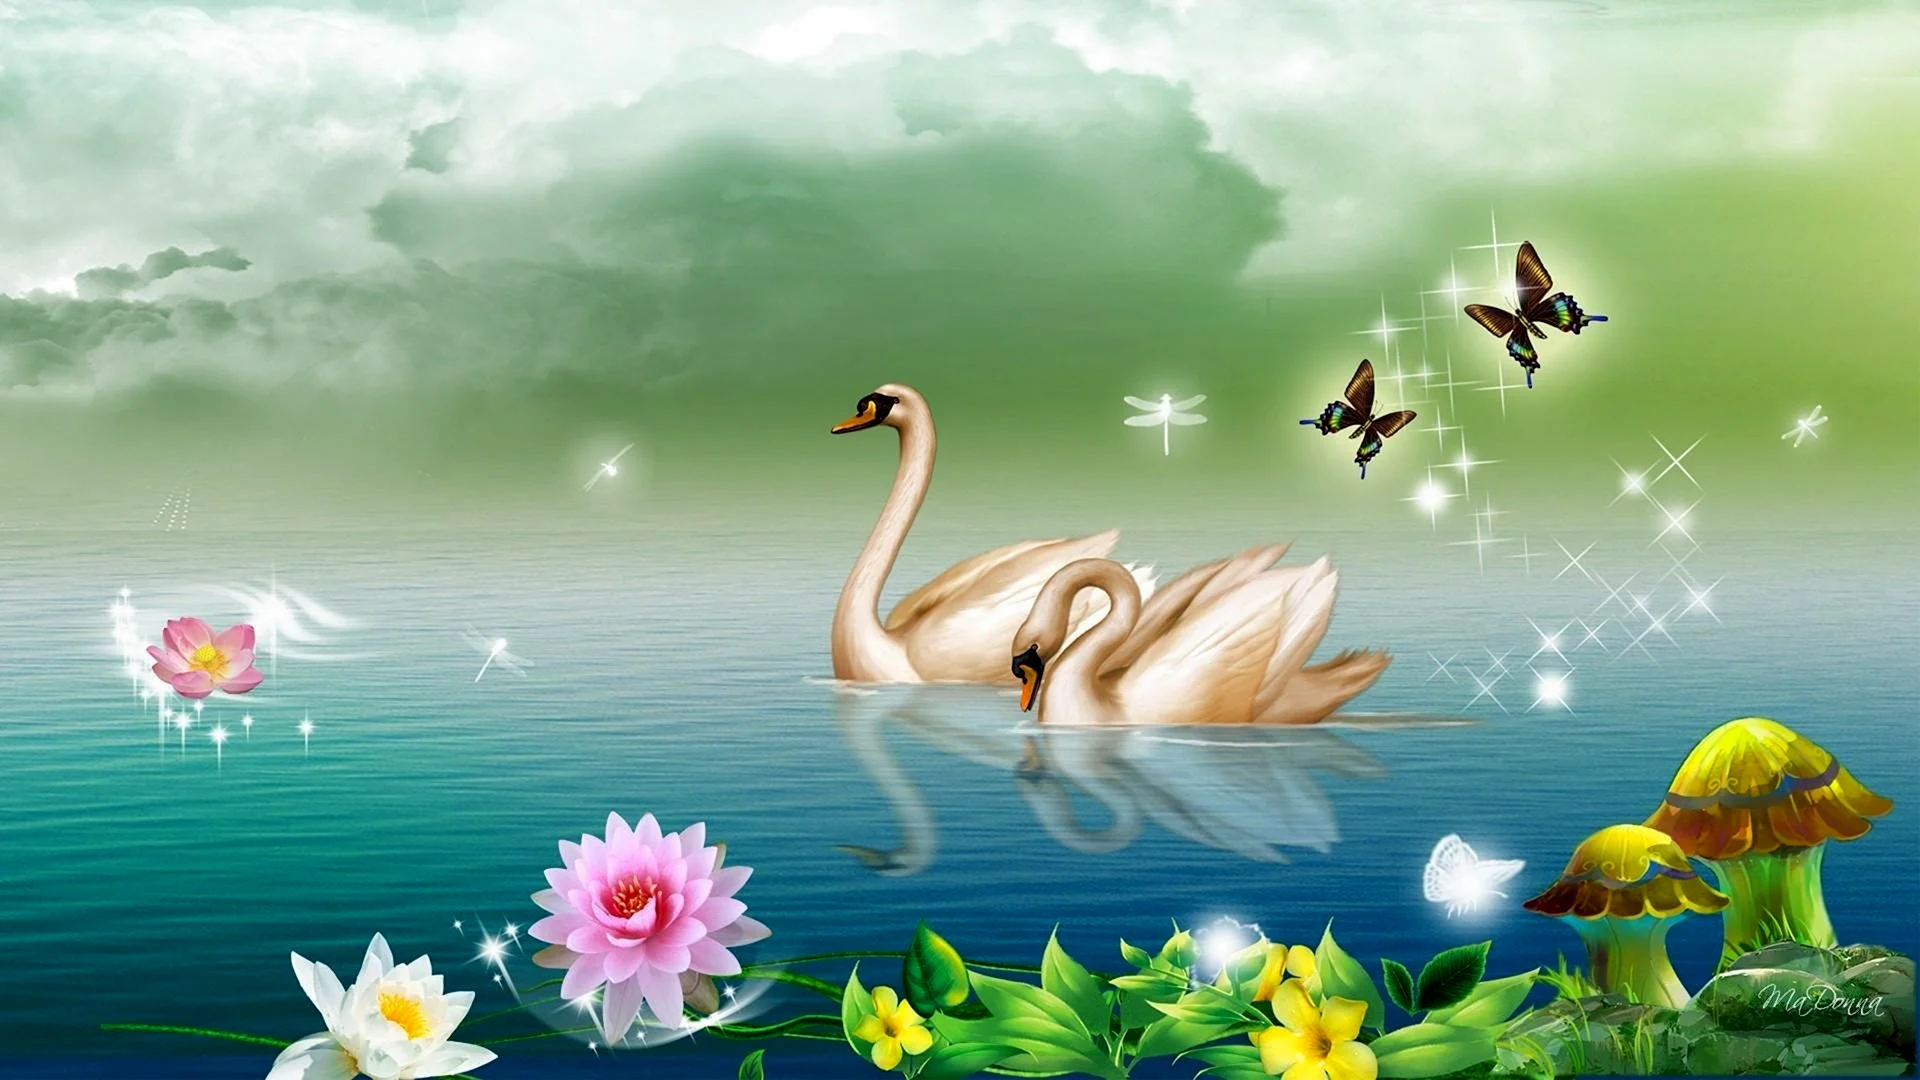 Сказочное озеро с лебедями